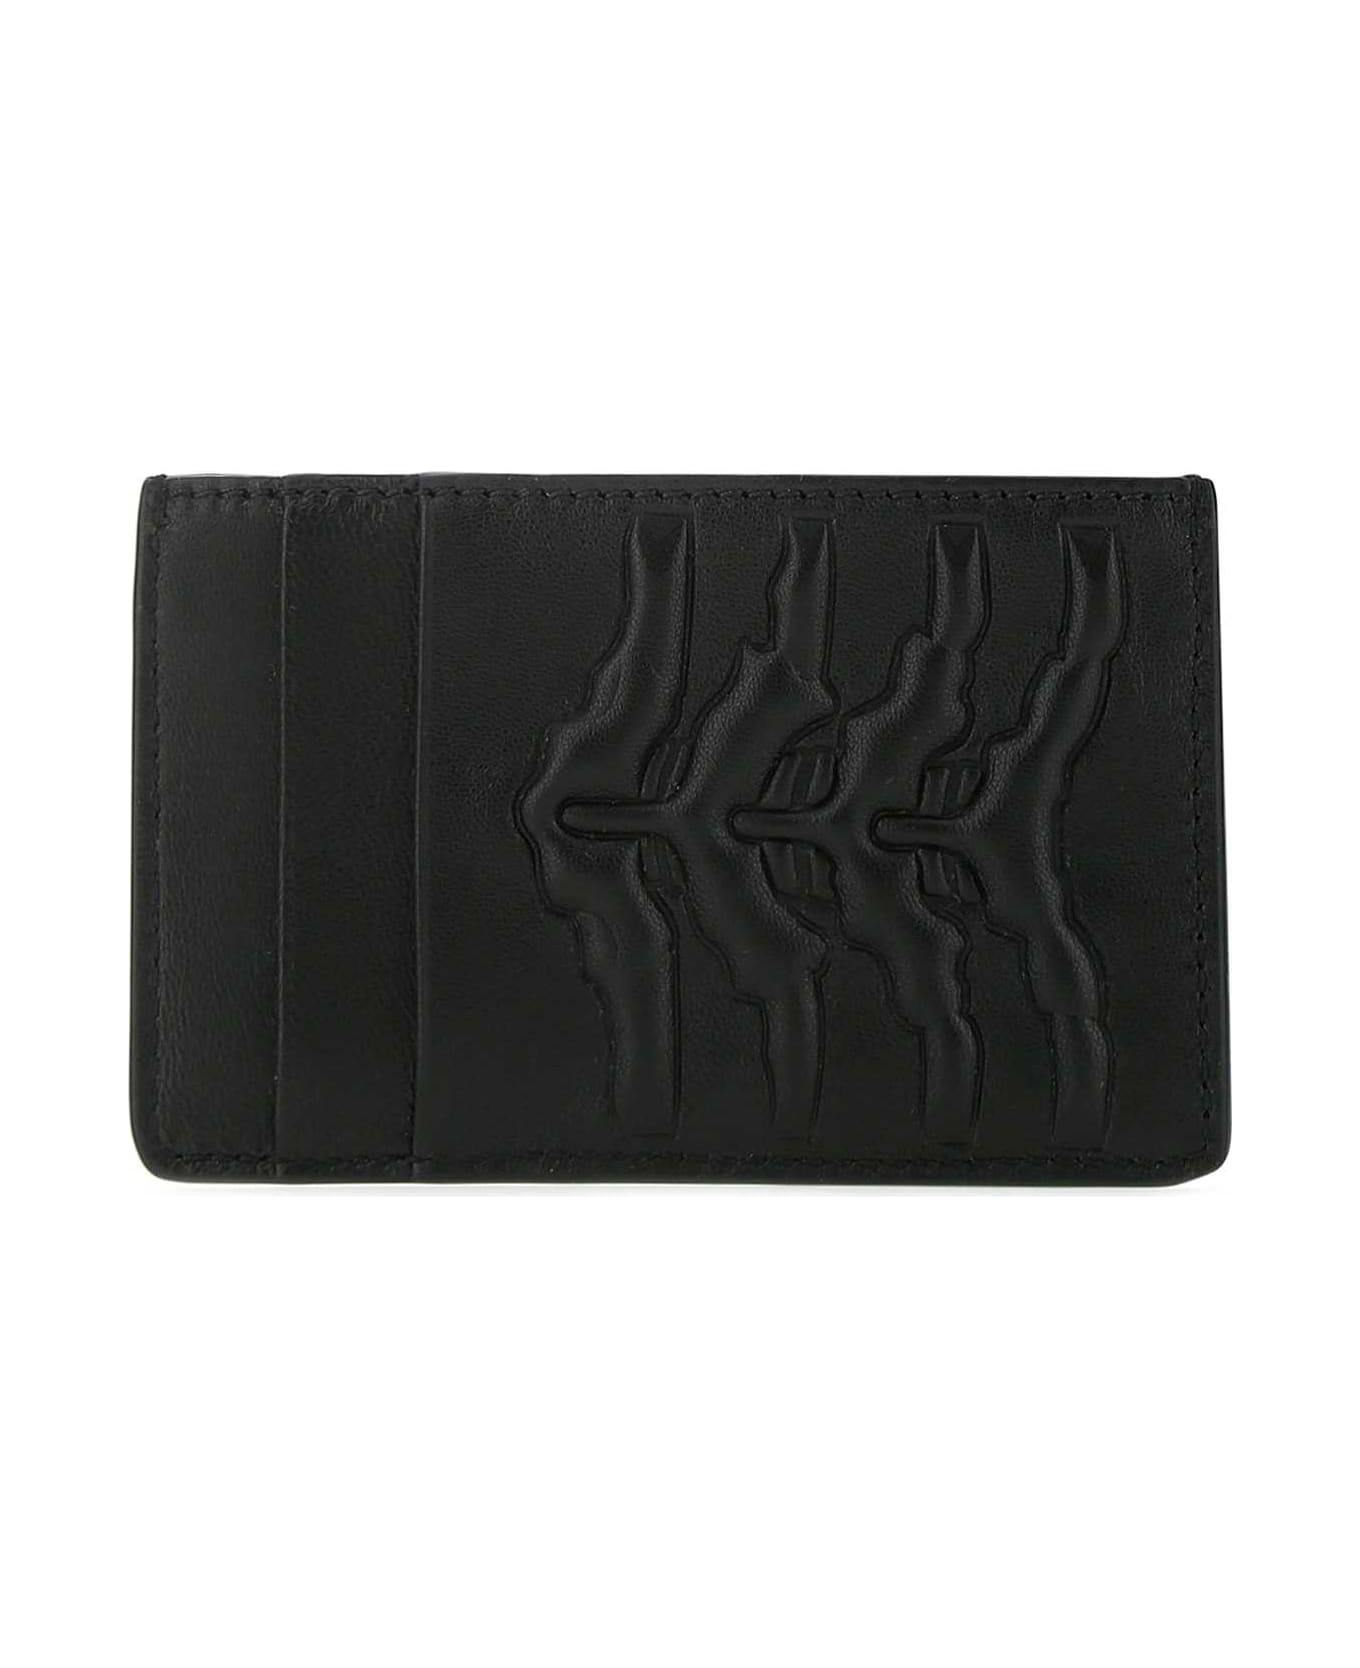 Alexander McQueen Black Nappa Leather Card Holder - 1000